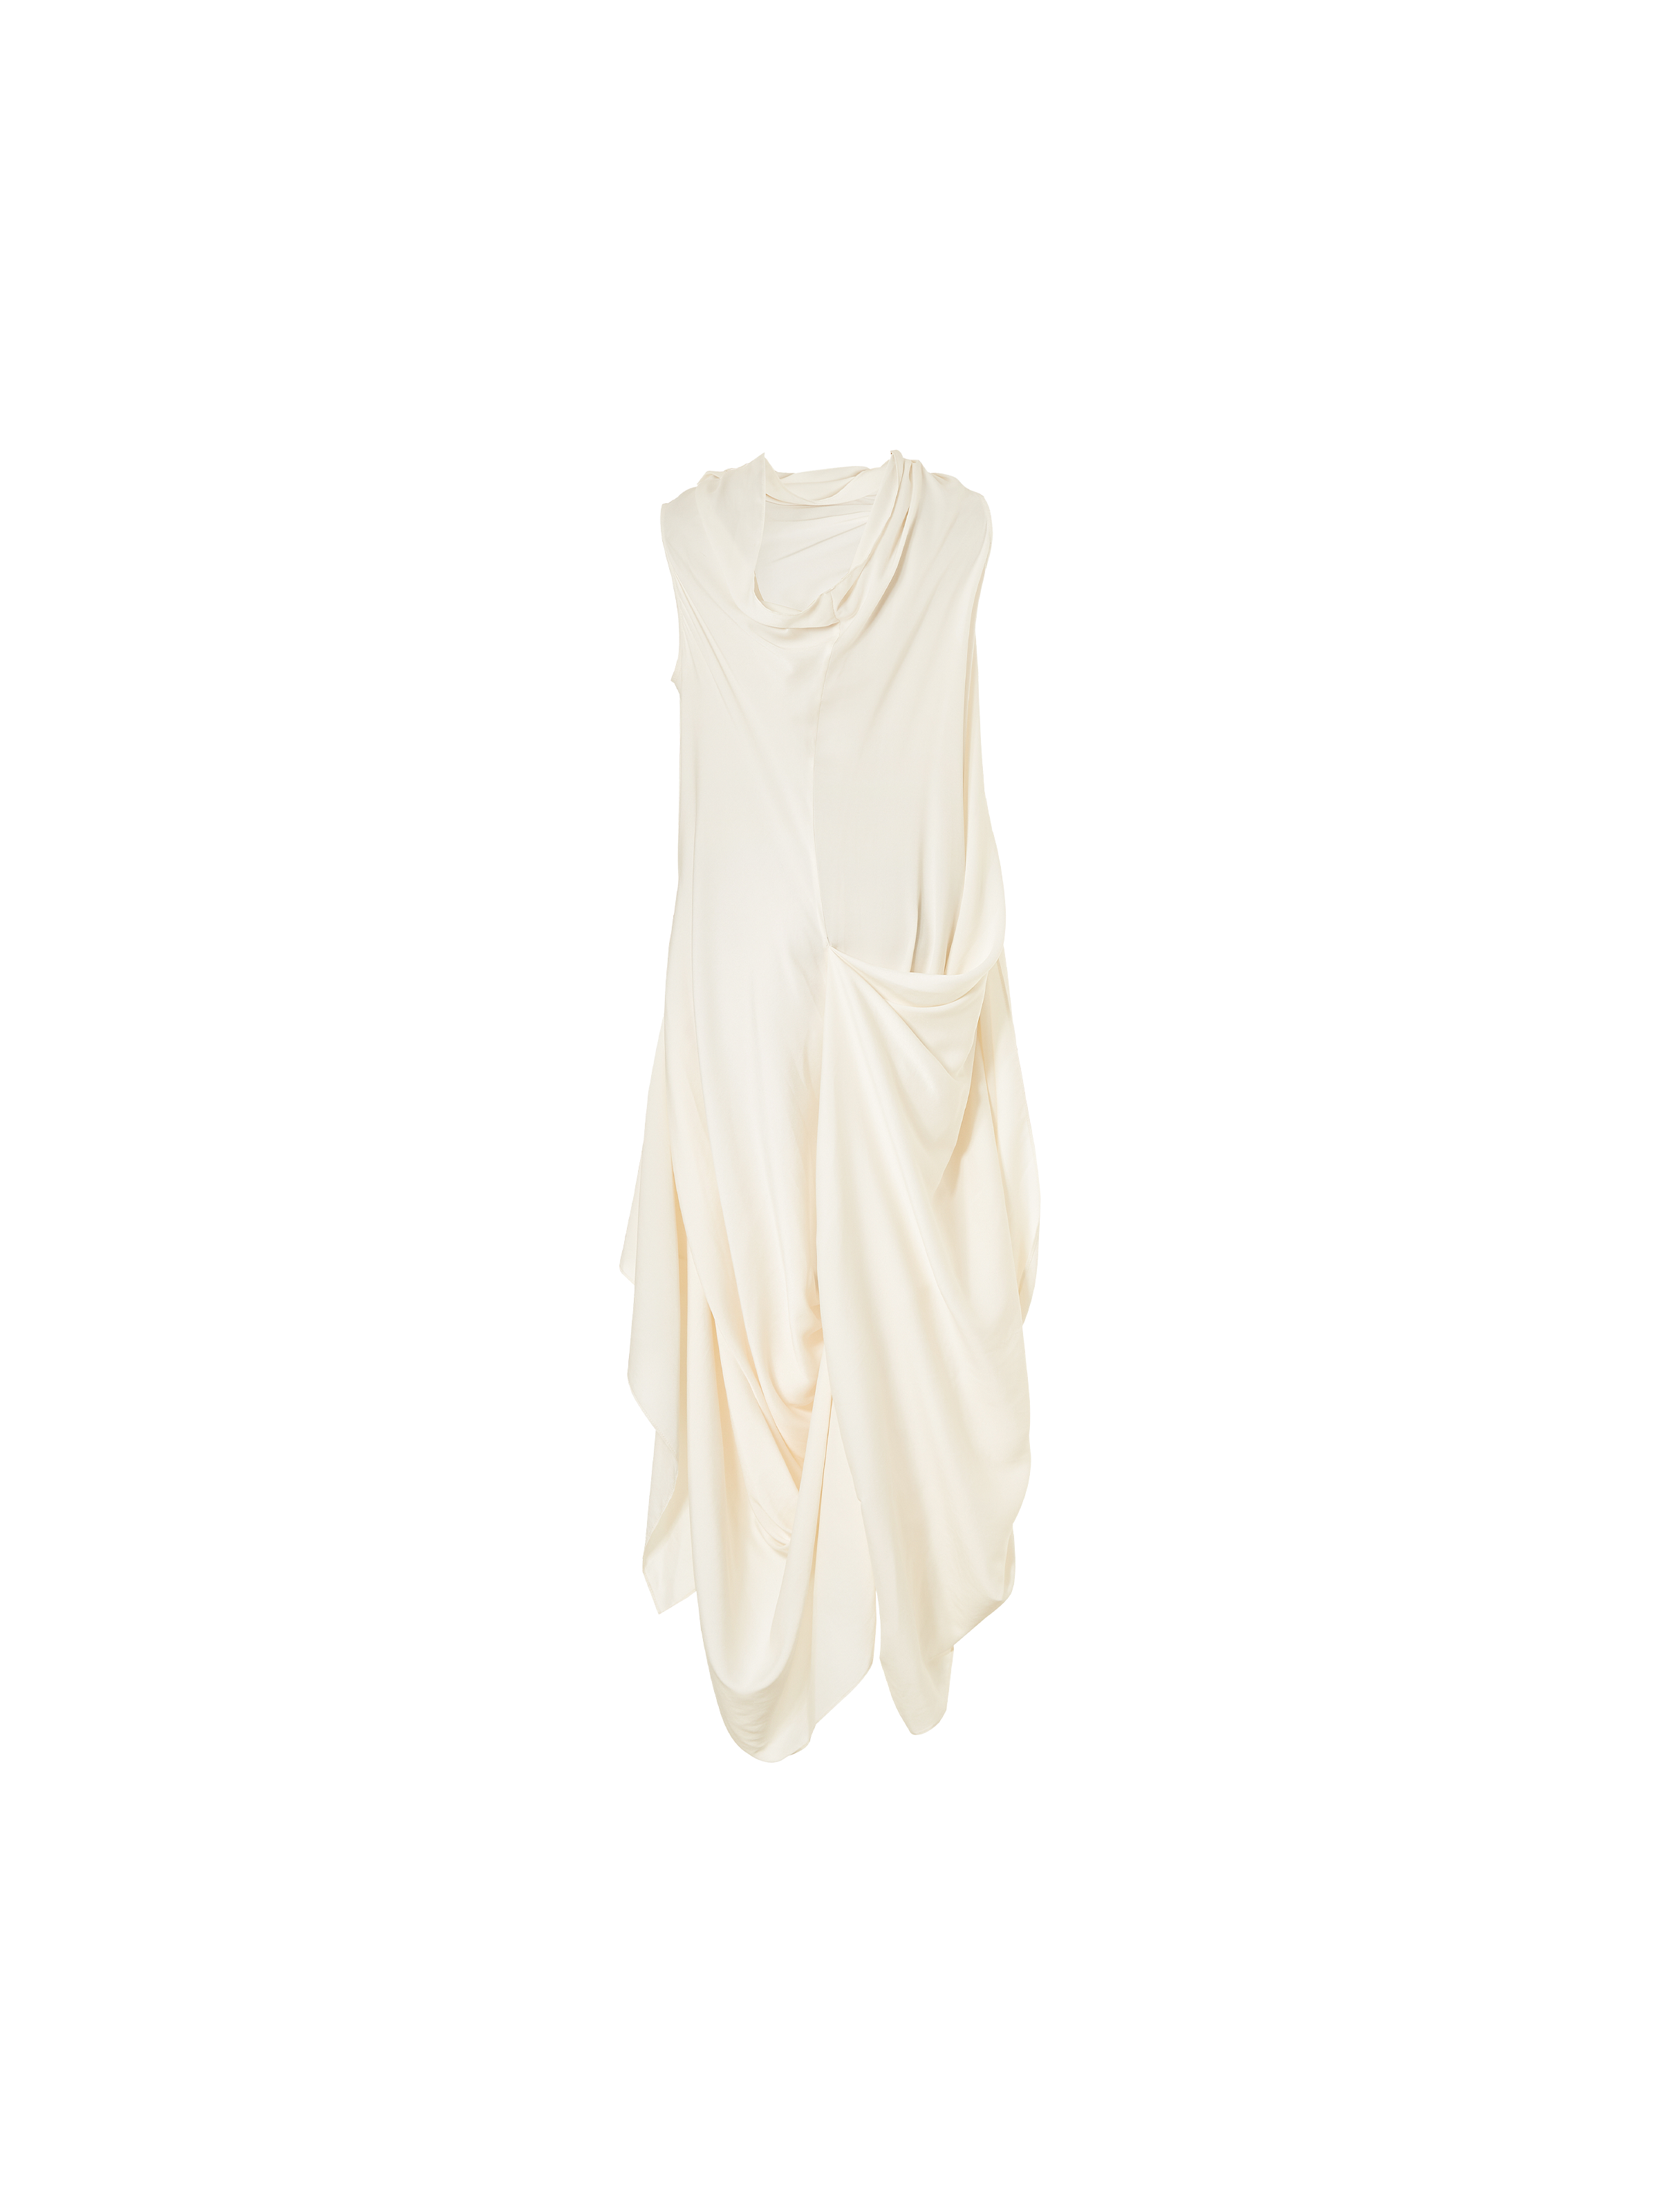 White One-piece Dress Long